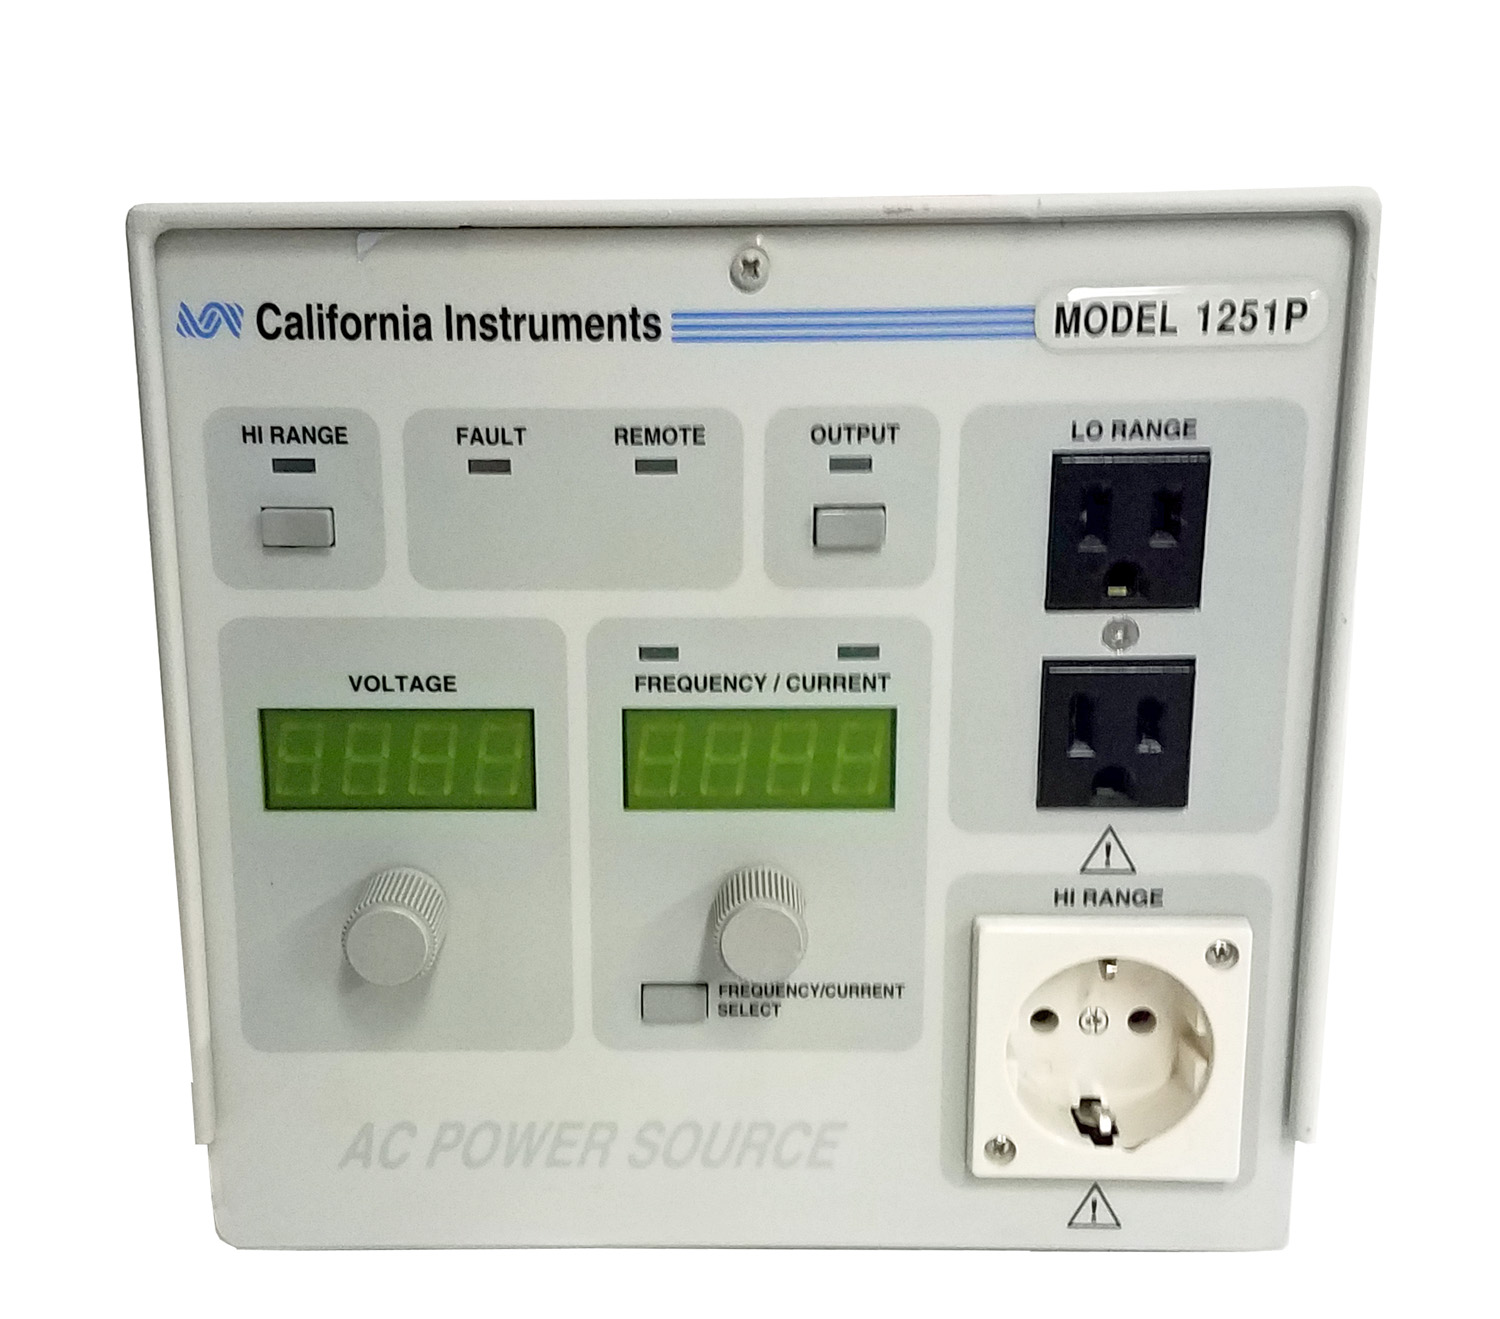 Similar product is California Instrument 1001P